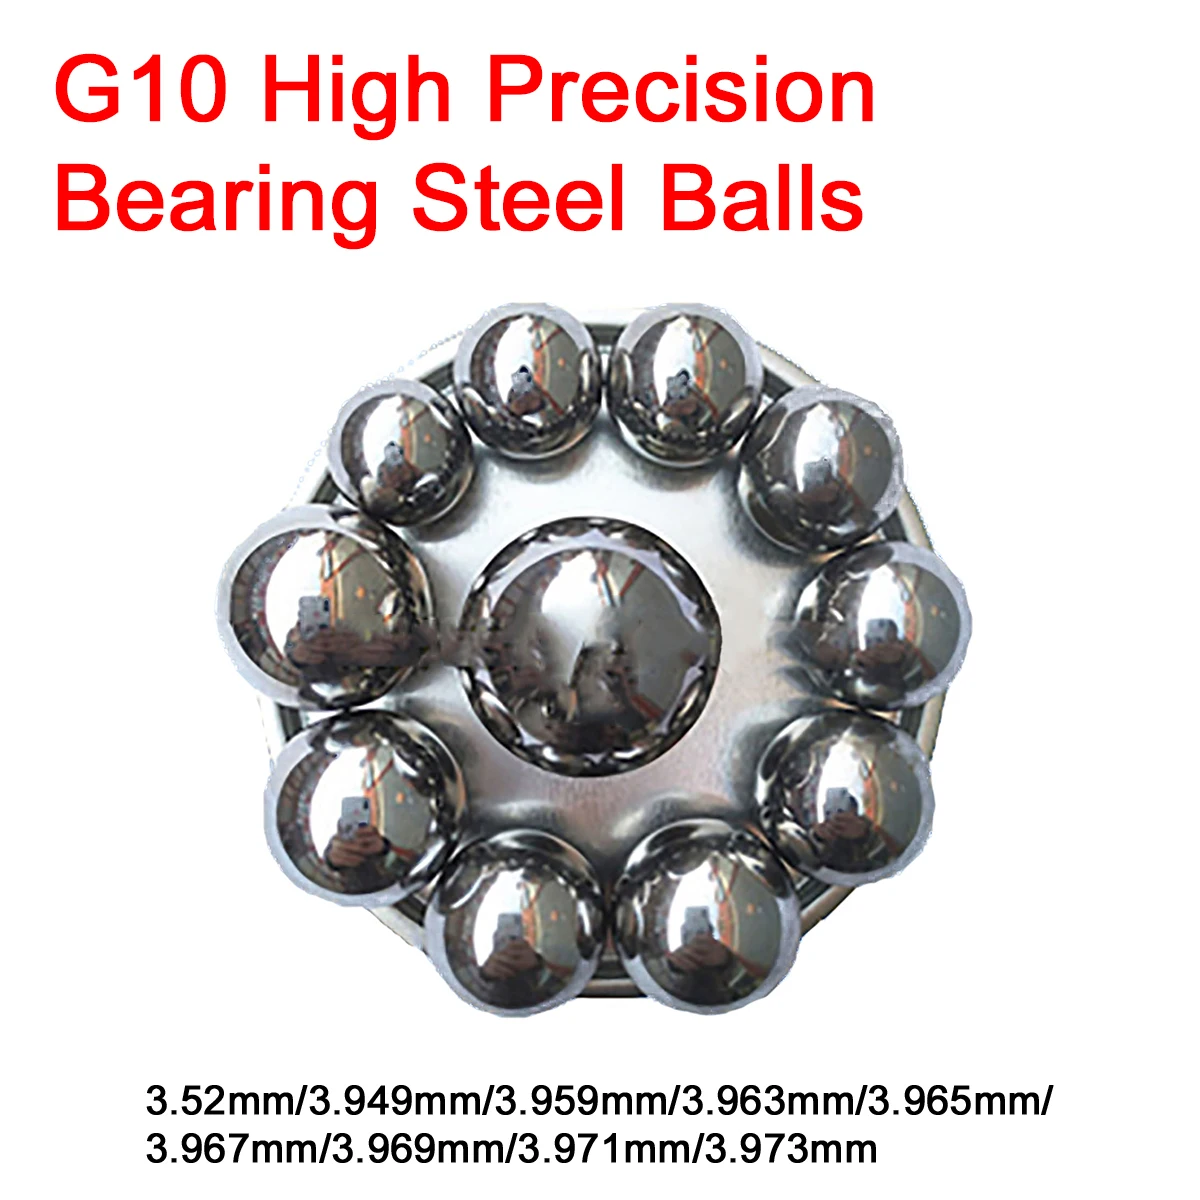 

100/500/1000Pcs G10 Grade High Precision Chrome Bearing Steel Balls 3.52/3.949/3.959/3.963/3.965/3.967/3.969/3.971/3.973mm